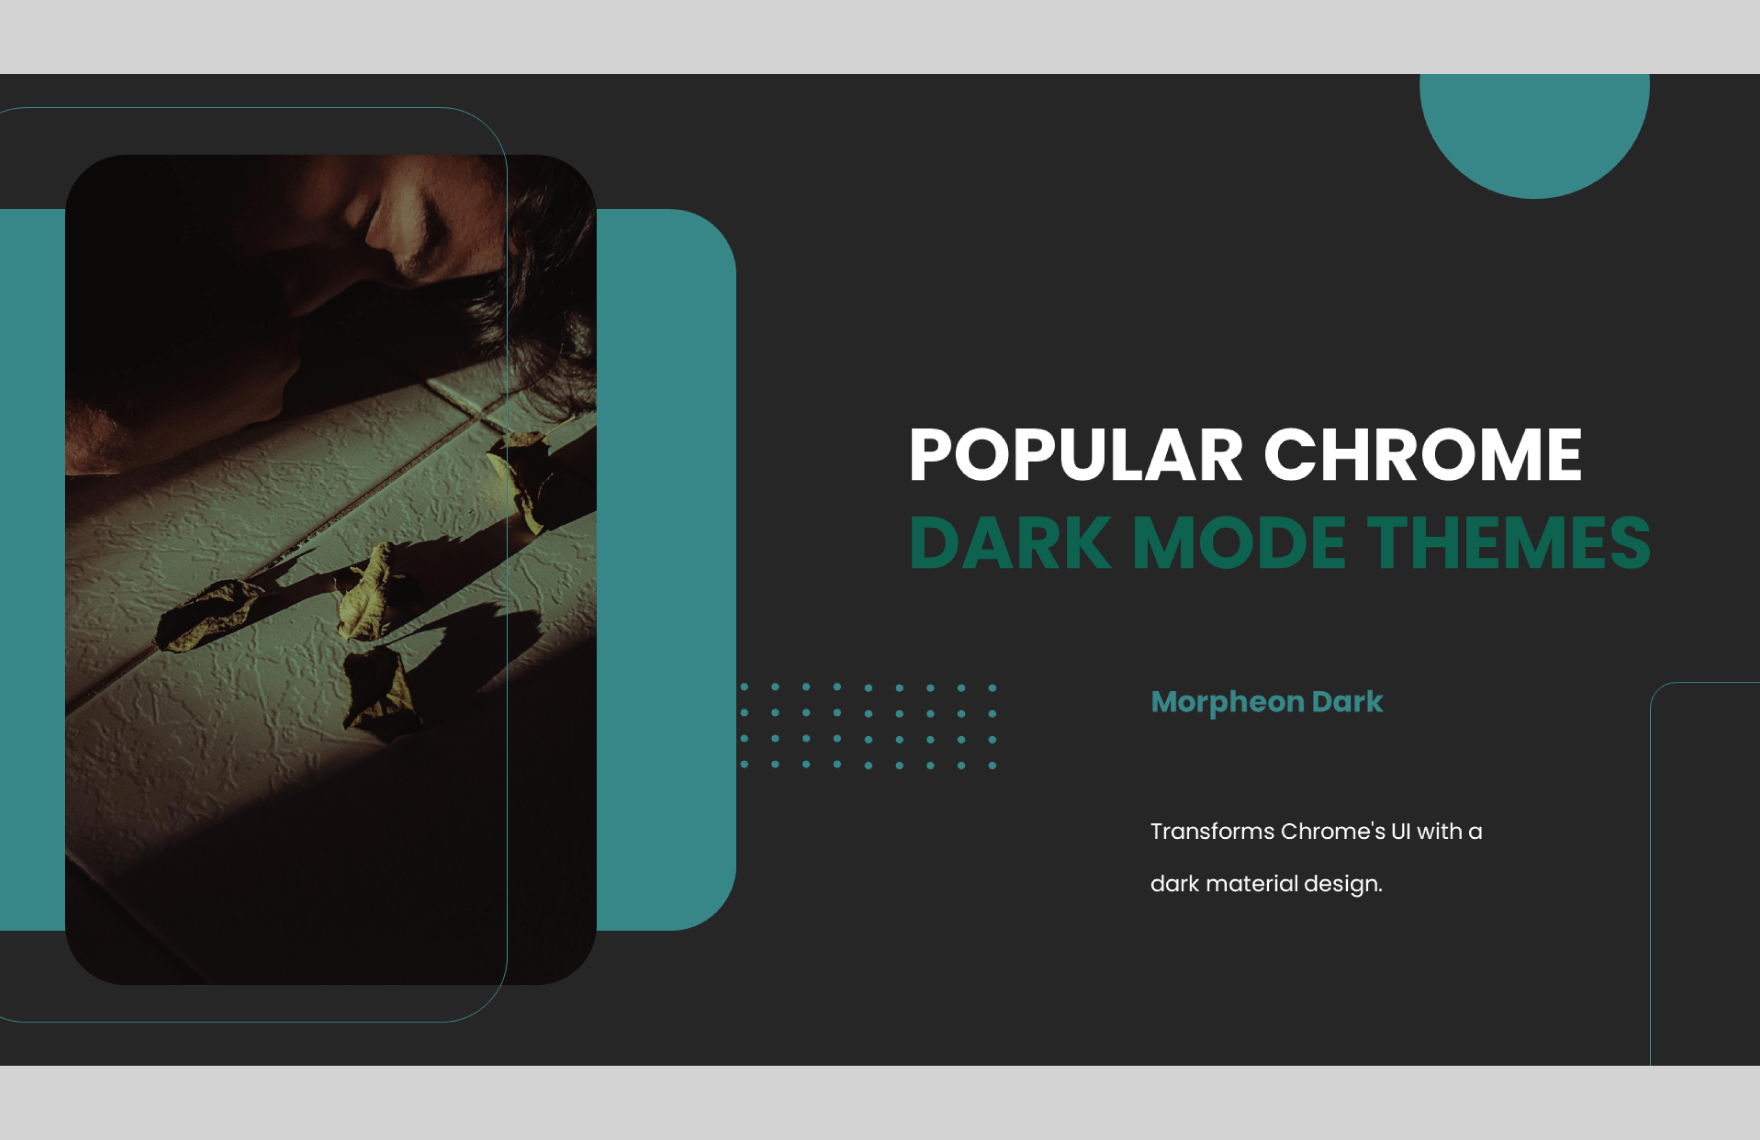 Chrome Dark Mode Themes Template